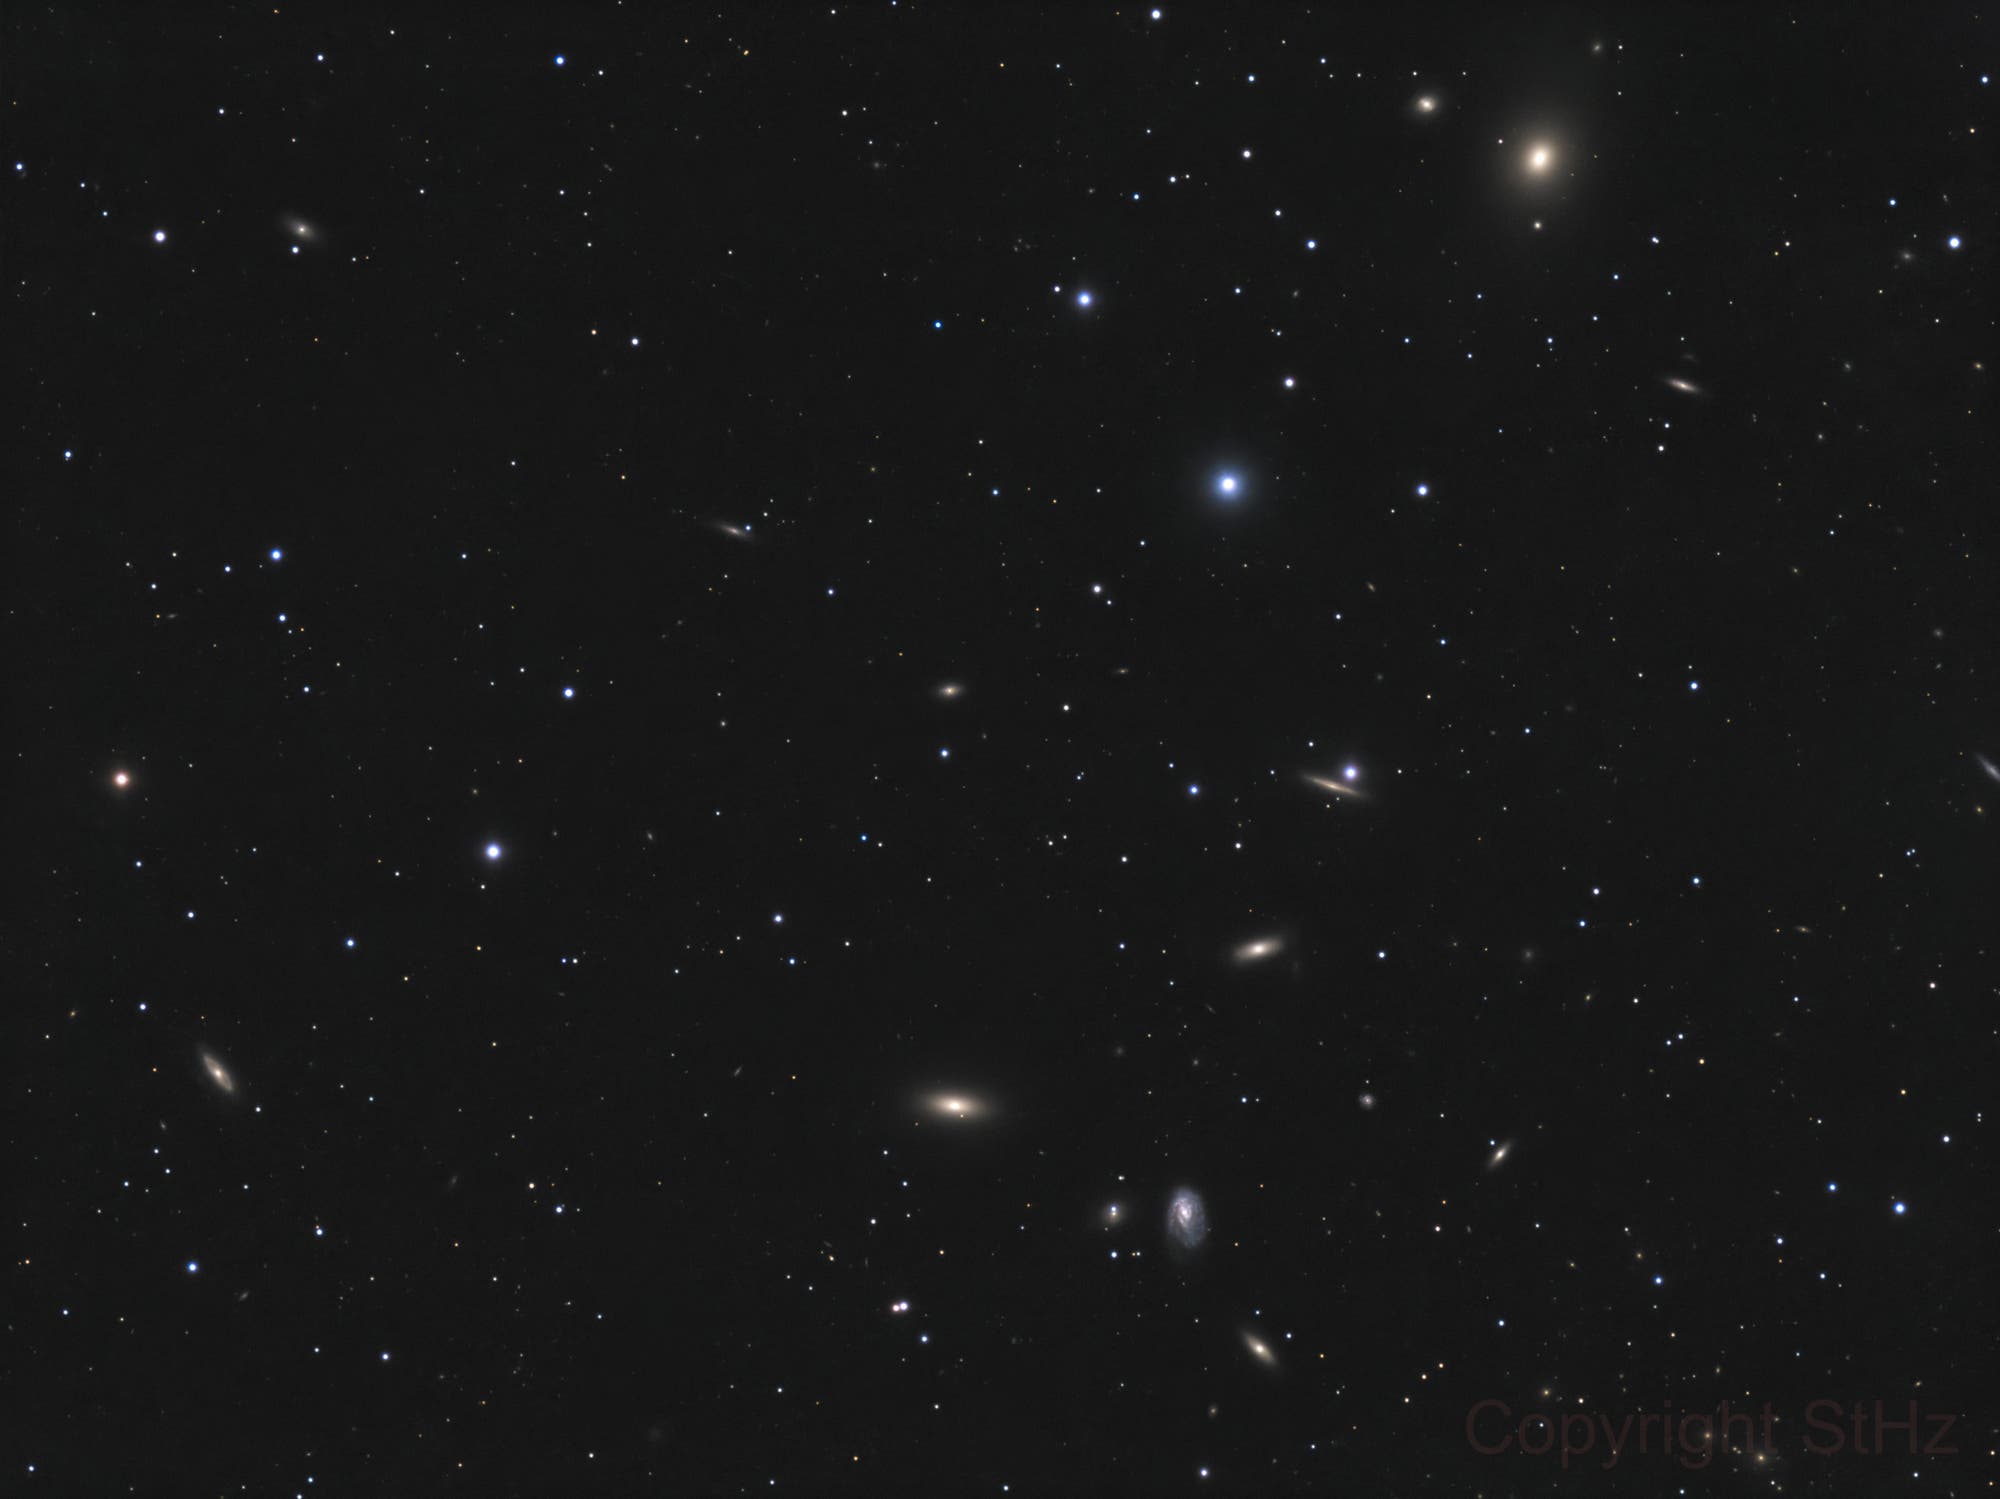 Supernova 2020ftl in NGC 4277